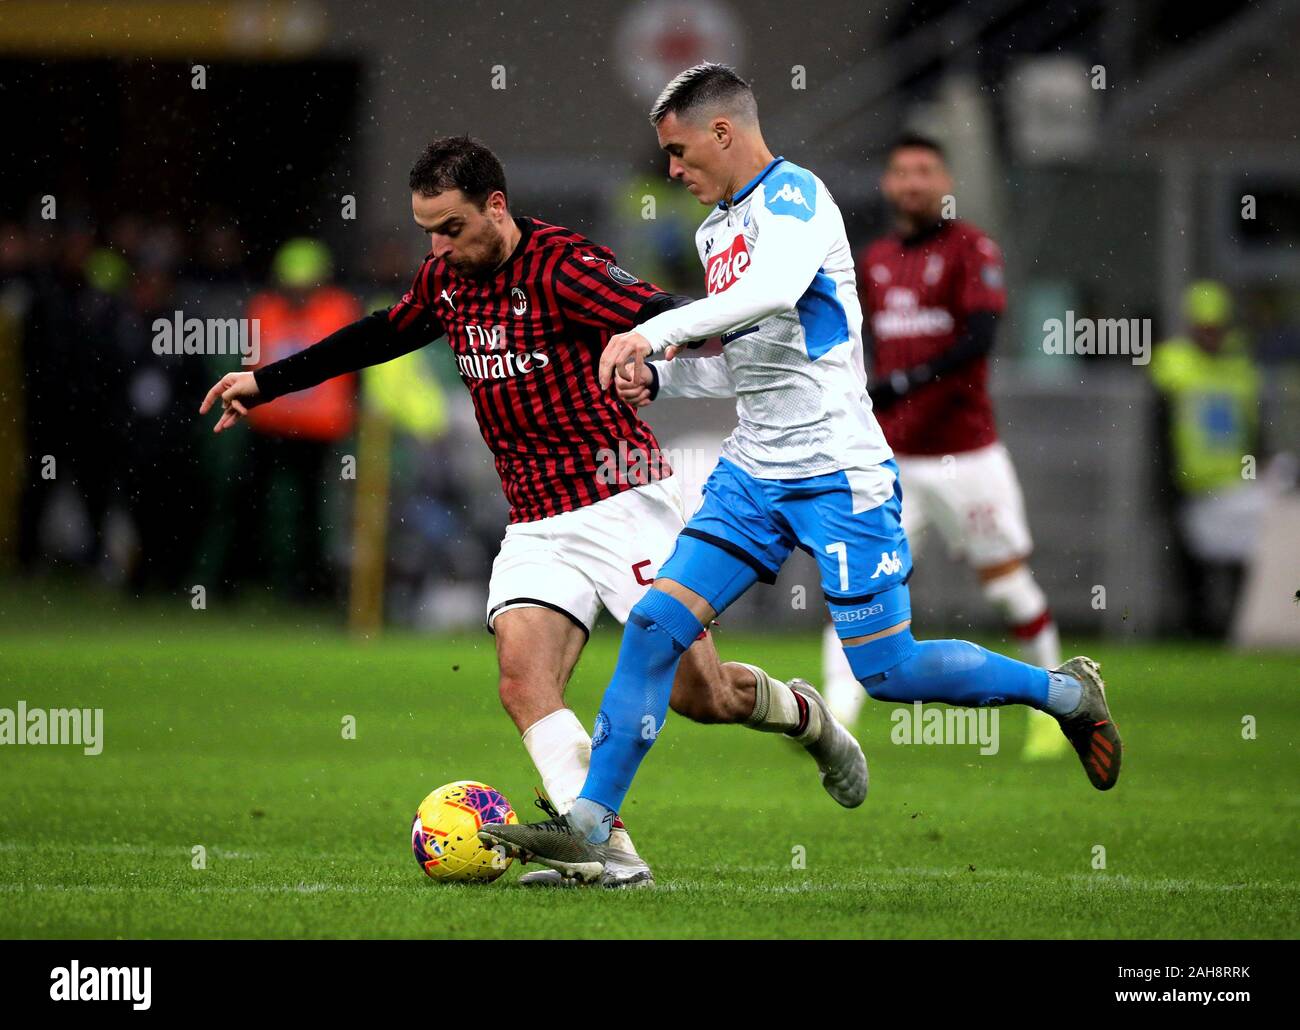 Milan, ITALIE - 23 novembre 2019: Giacomo Bonaventura et Josèè Callejon en action pendant la série A 2019/2020 MILAN / NAPLES au stade San Siro. Banque D'Images